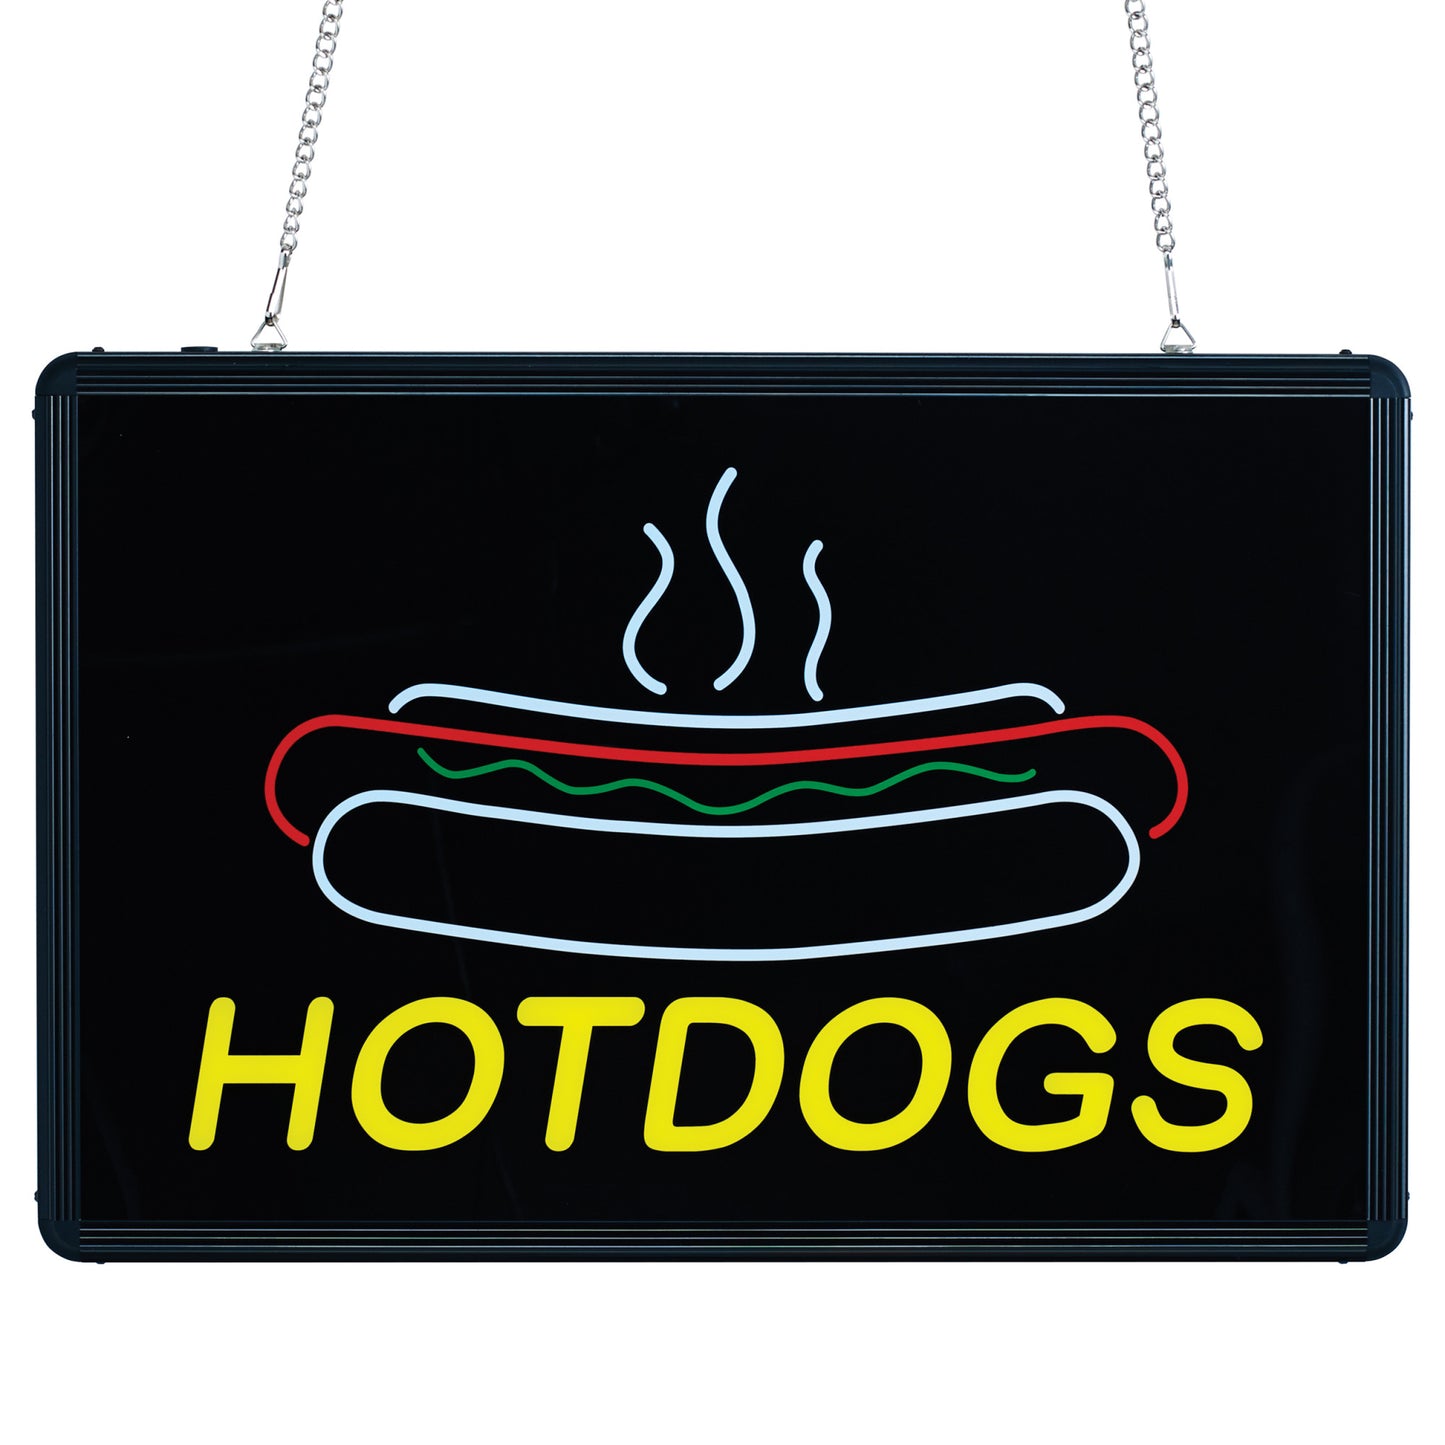 92002 - BenchmarkUSA Ultra-Bright Sign - Hotdogs